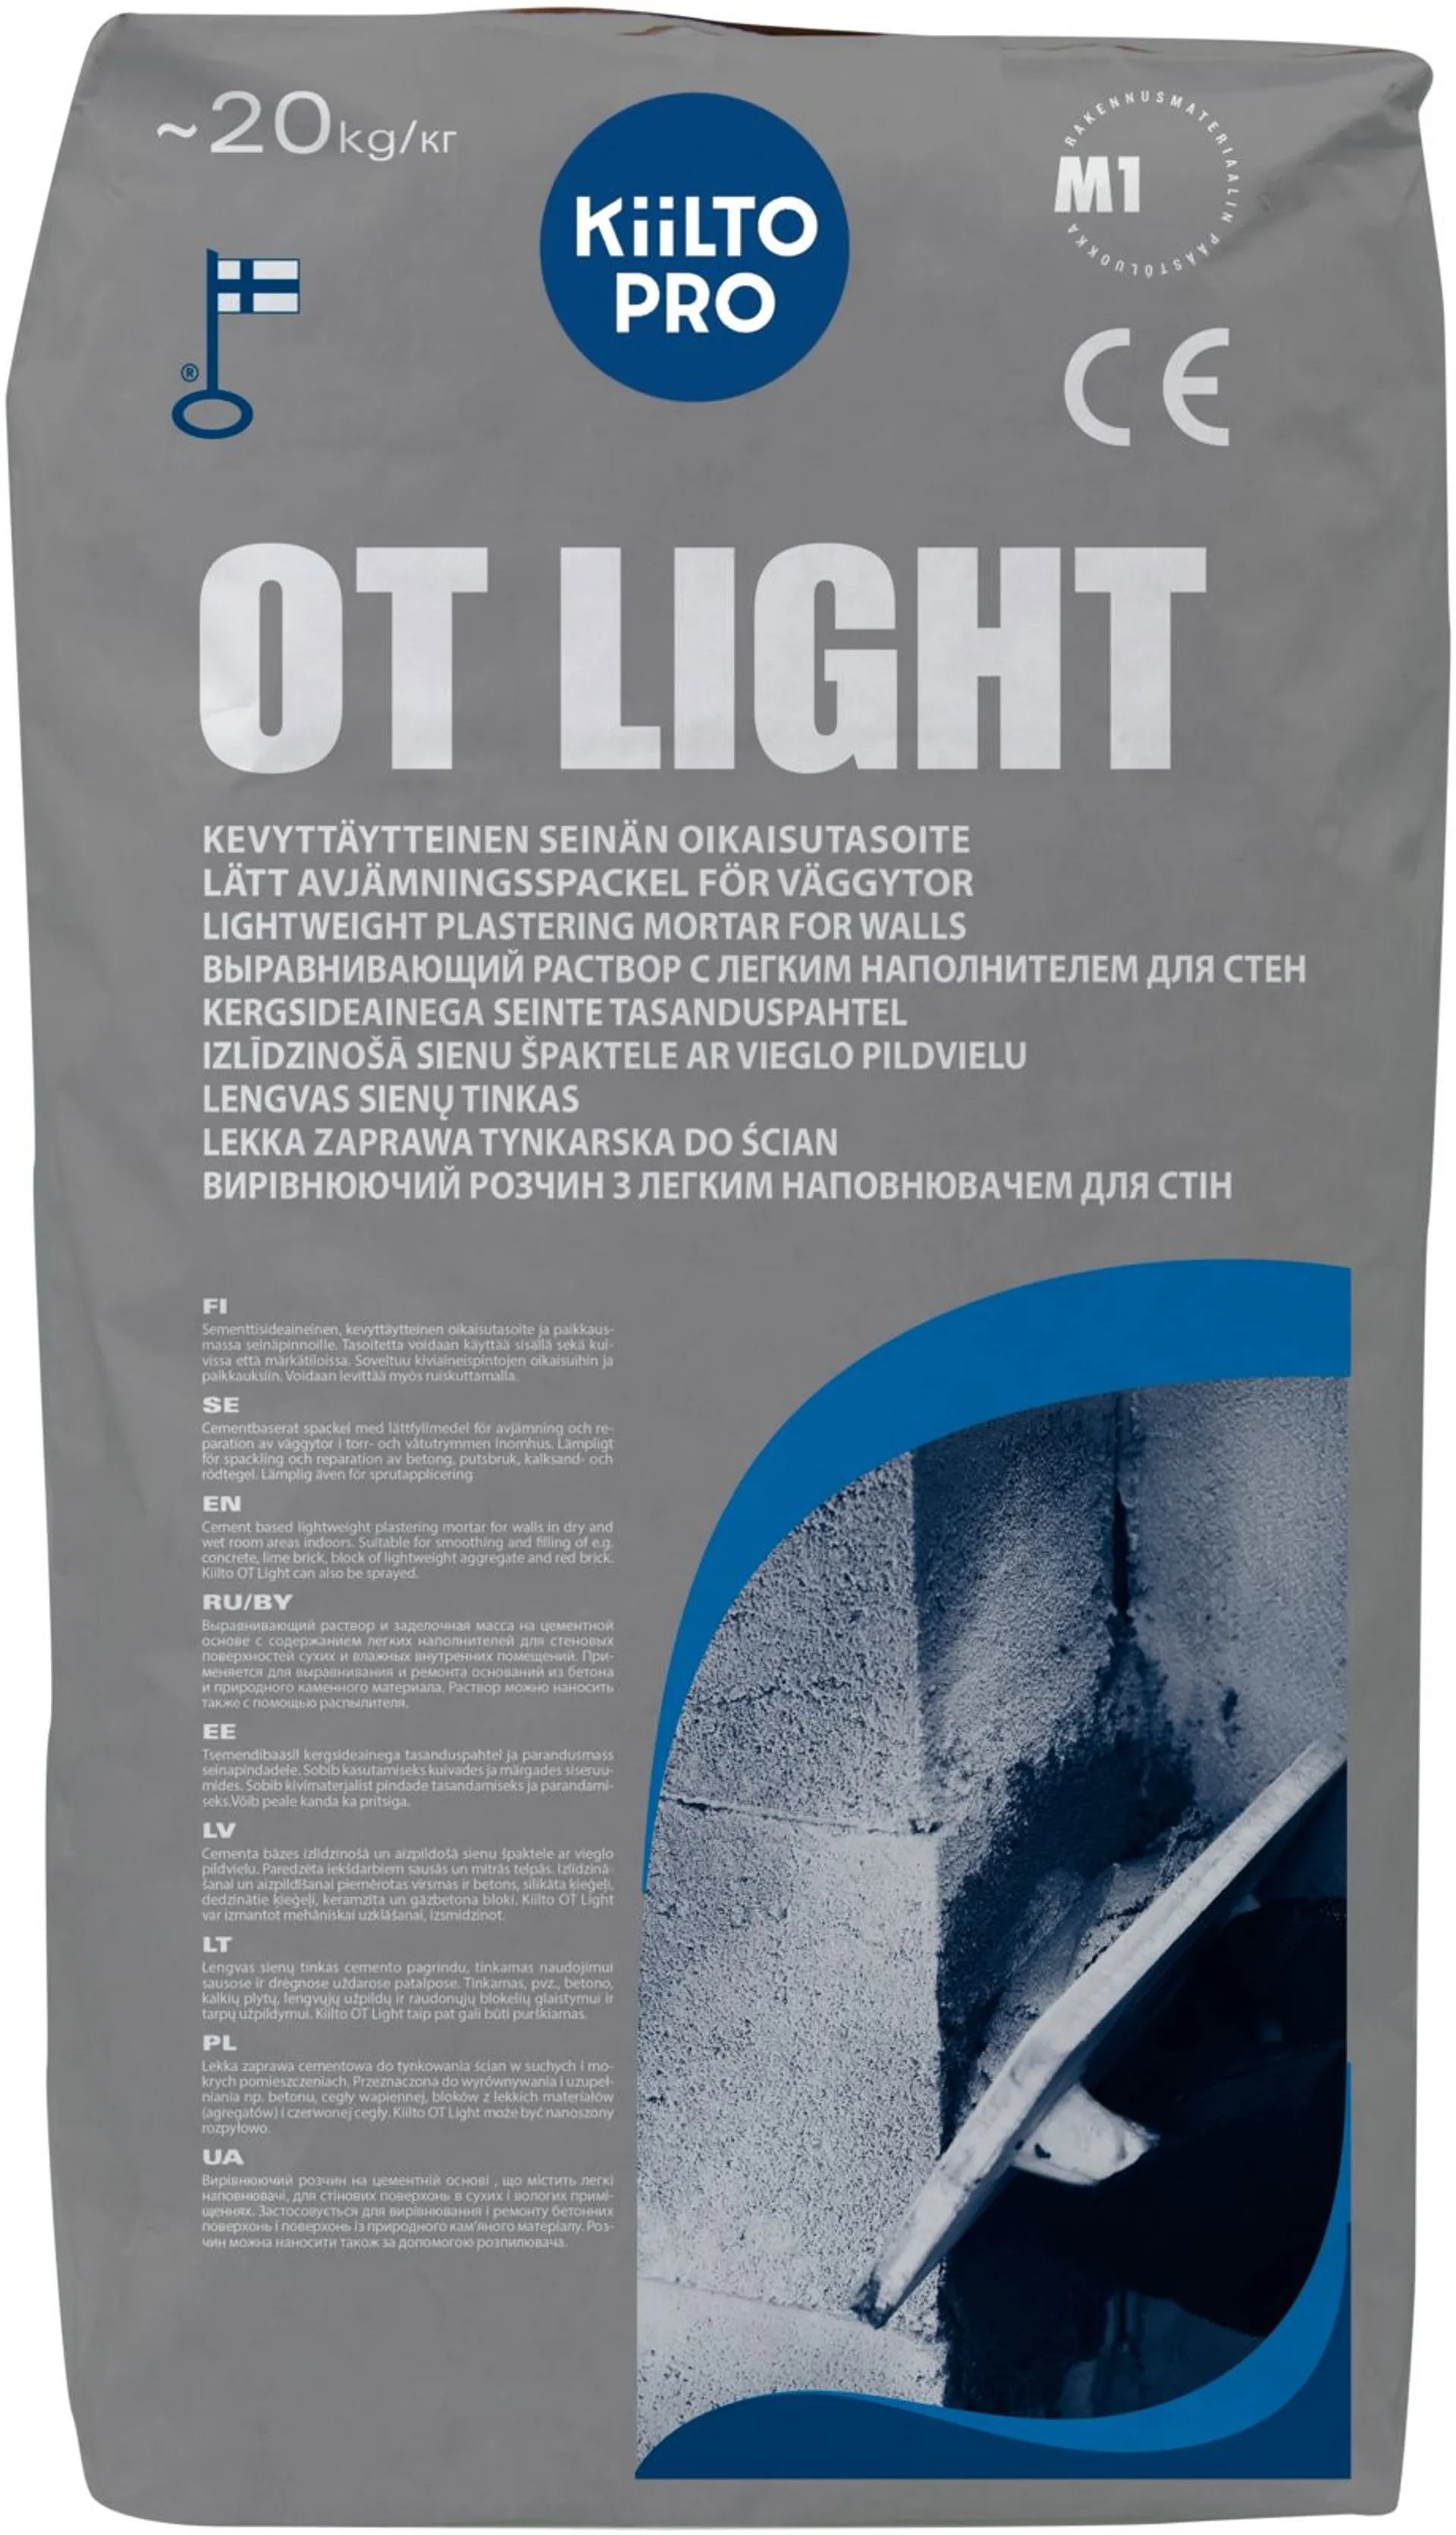 Kiilto OT Light oikaisutasoite 20 kg